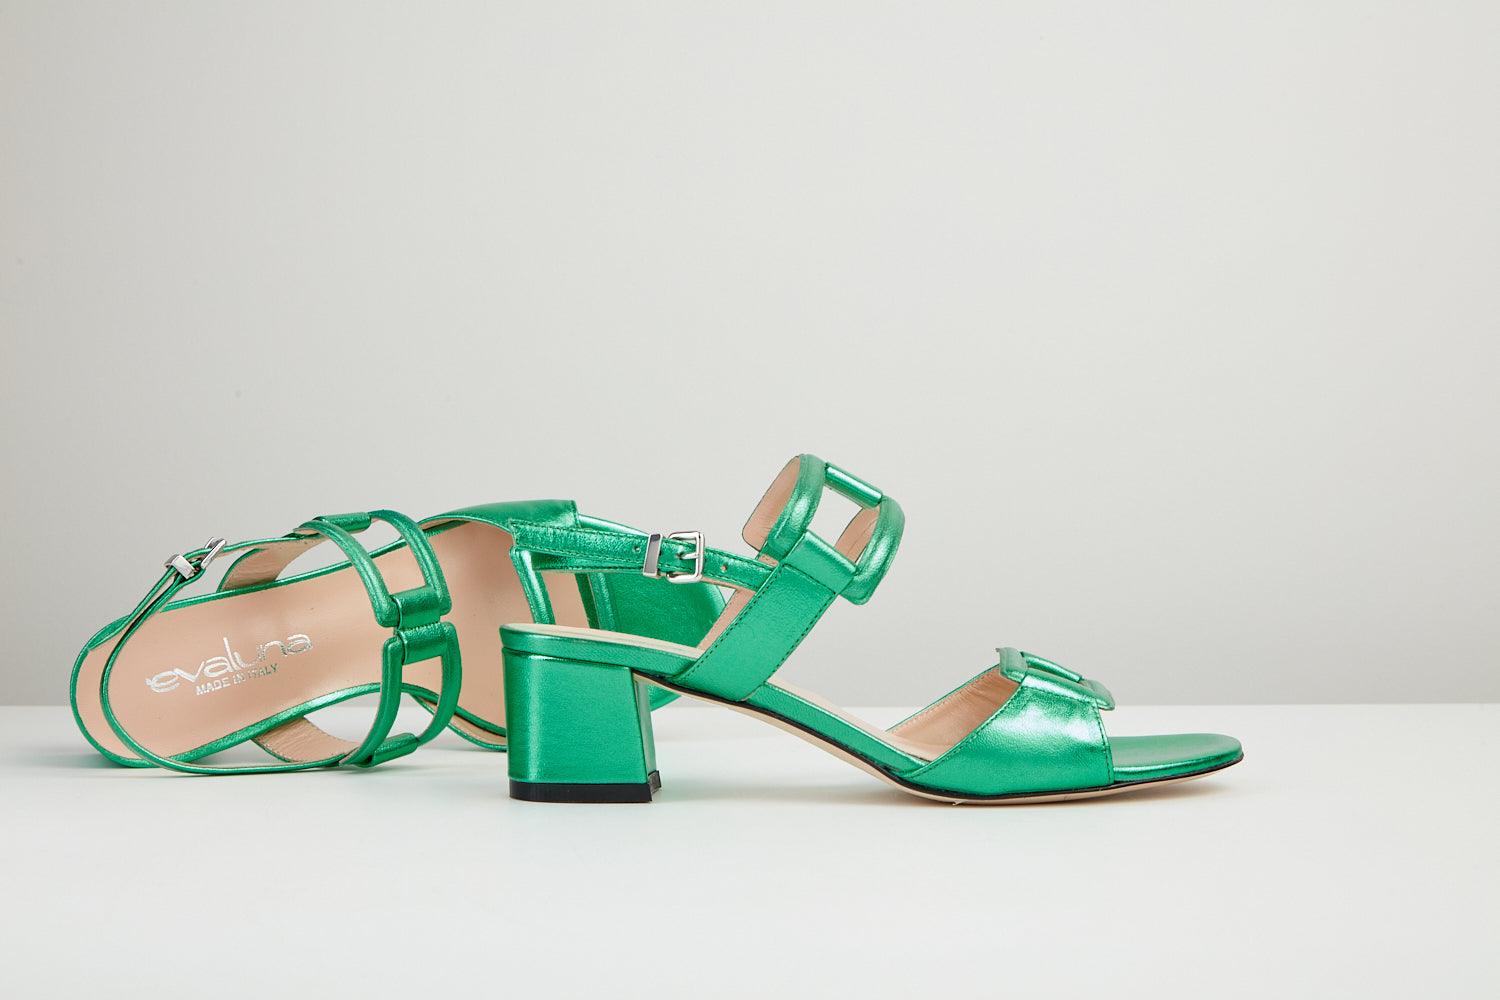 Grecia metallic green block heel sandal - MADE THE EDIT